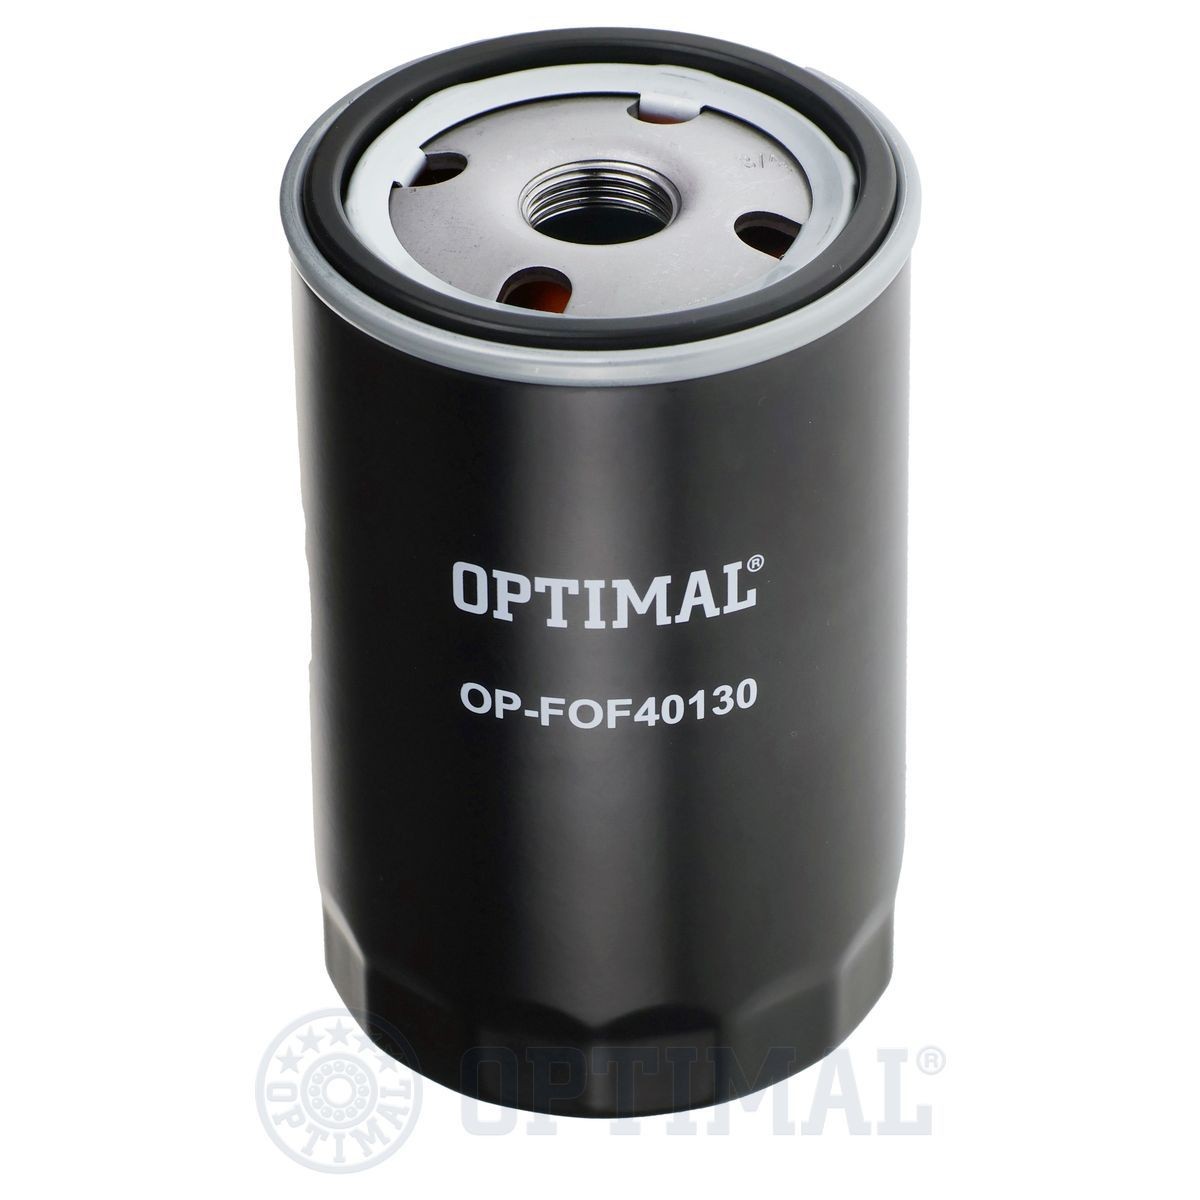 OPTIMAL OP-FOF40130 Oil filter 102-184-02-01